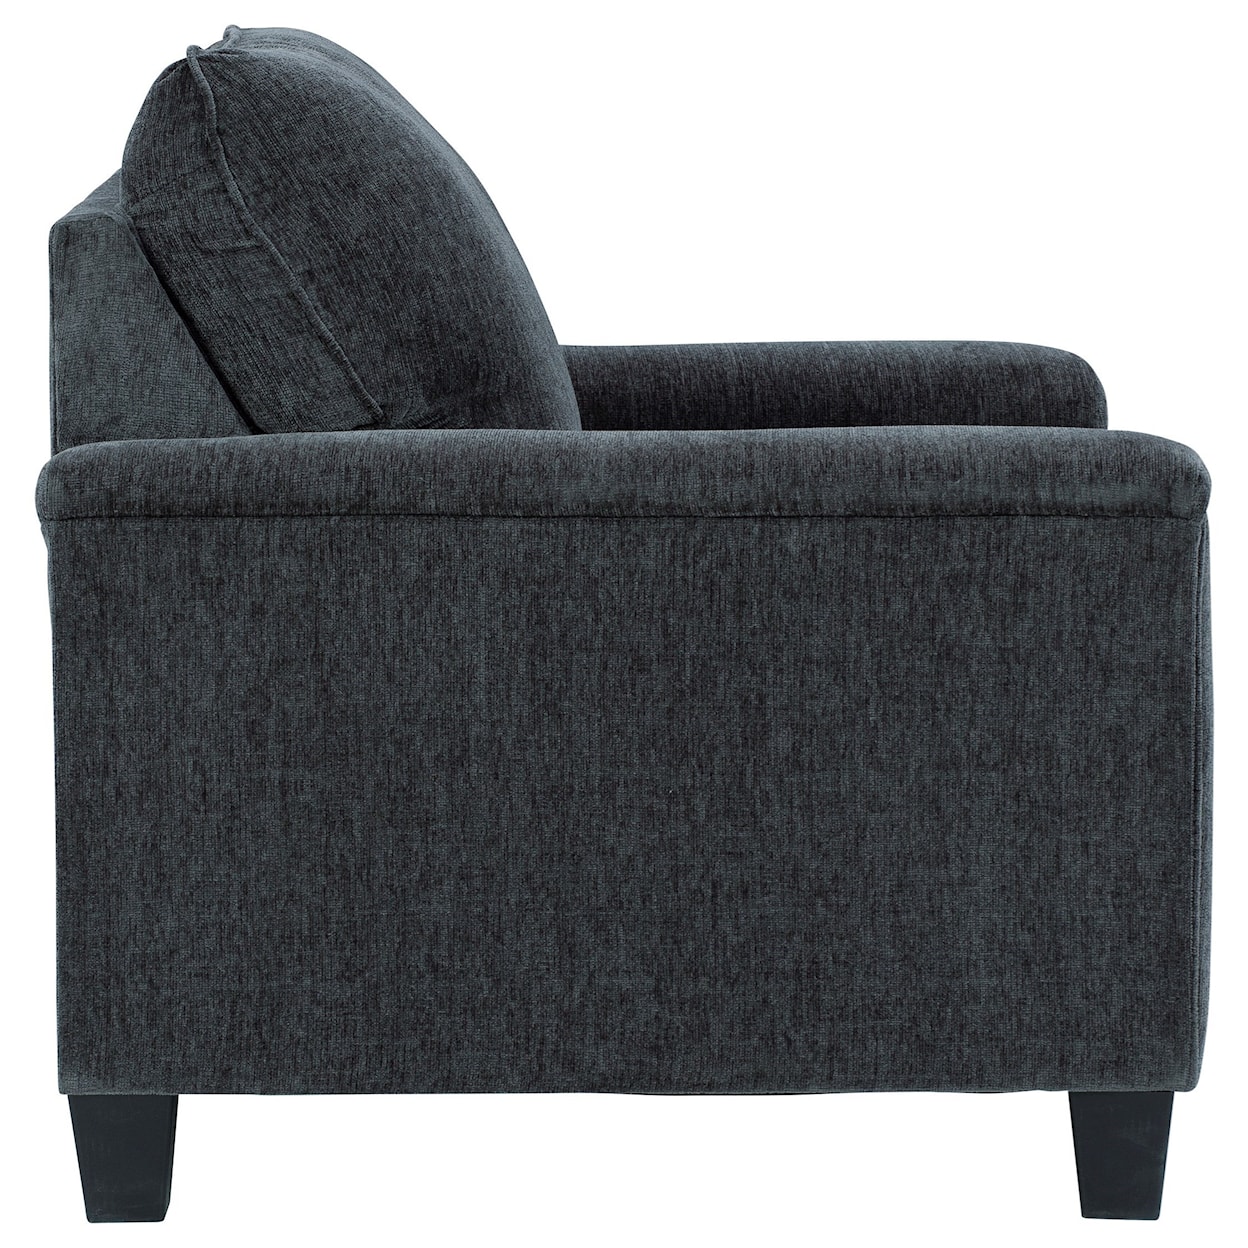 Ashley Furniture Signature Design Abinger Chair